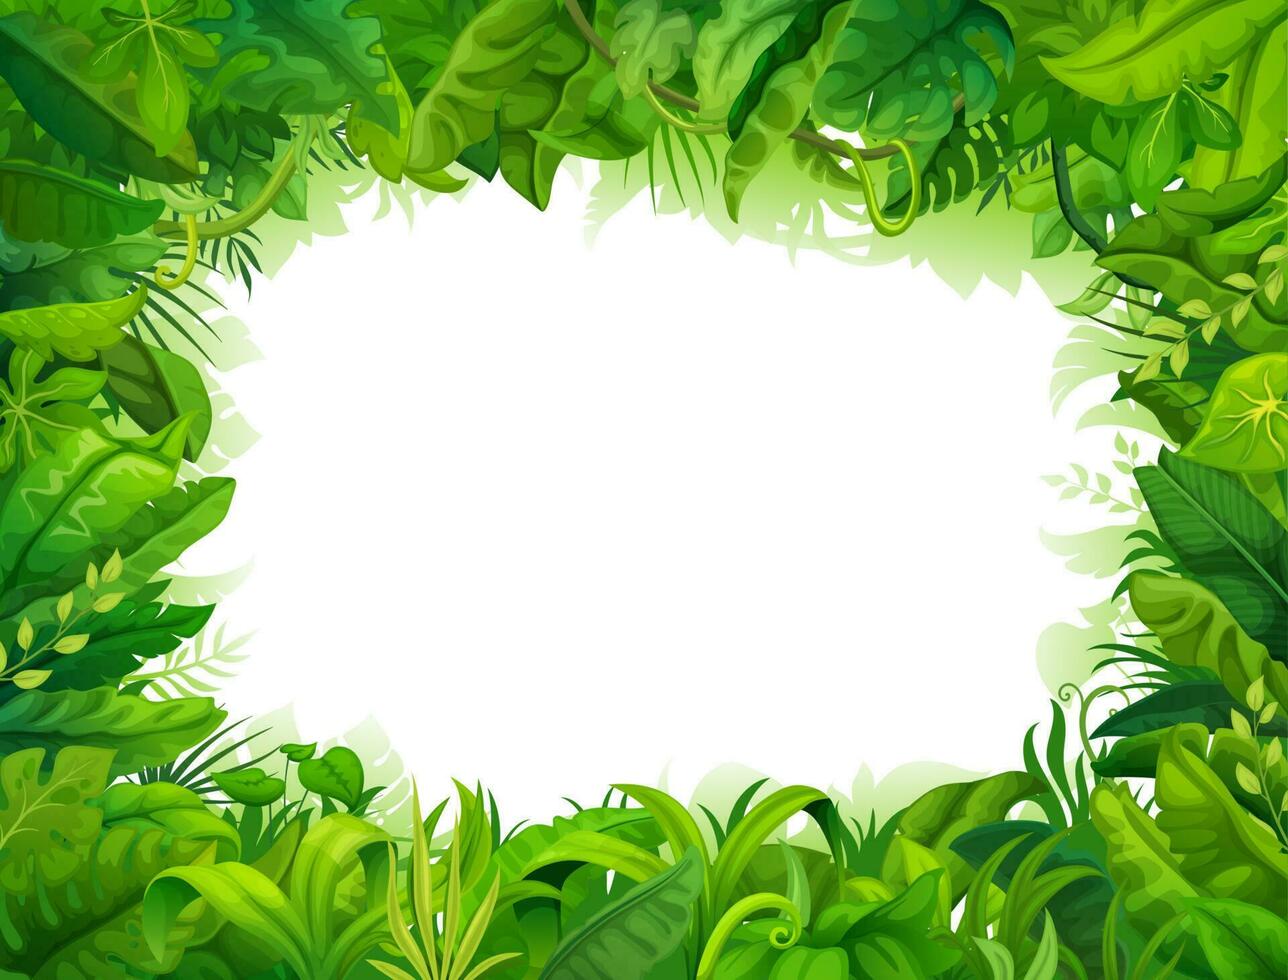 Cartoon jungle plants leaves frame or backdrop vector